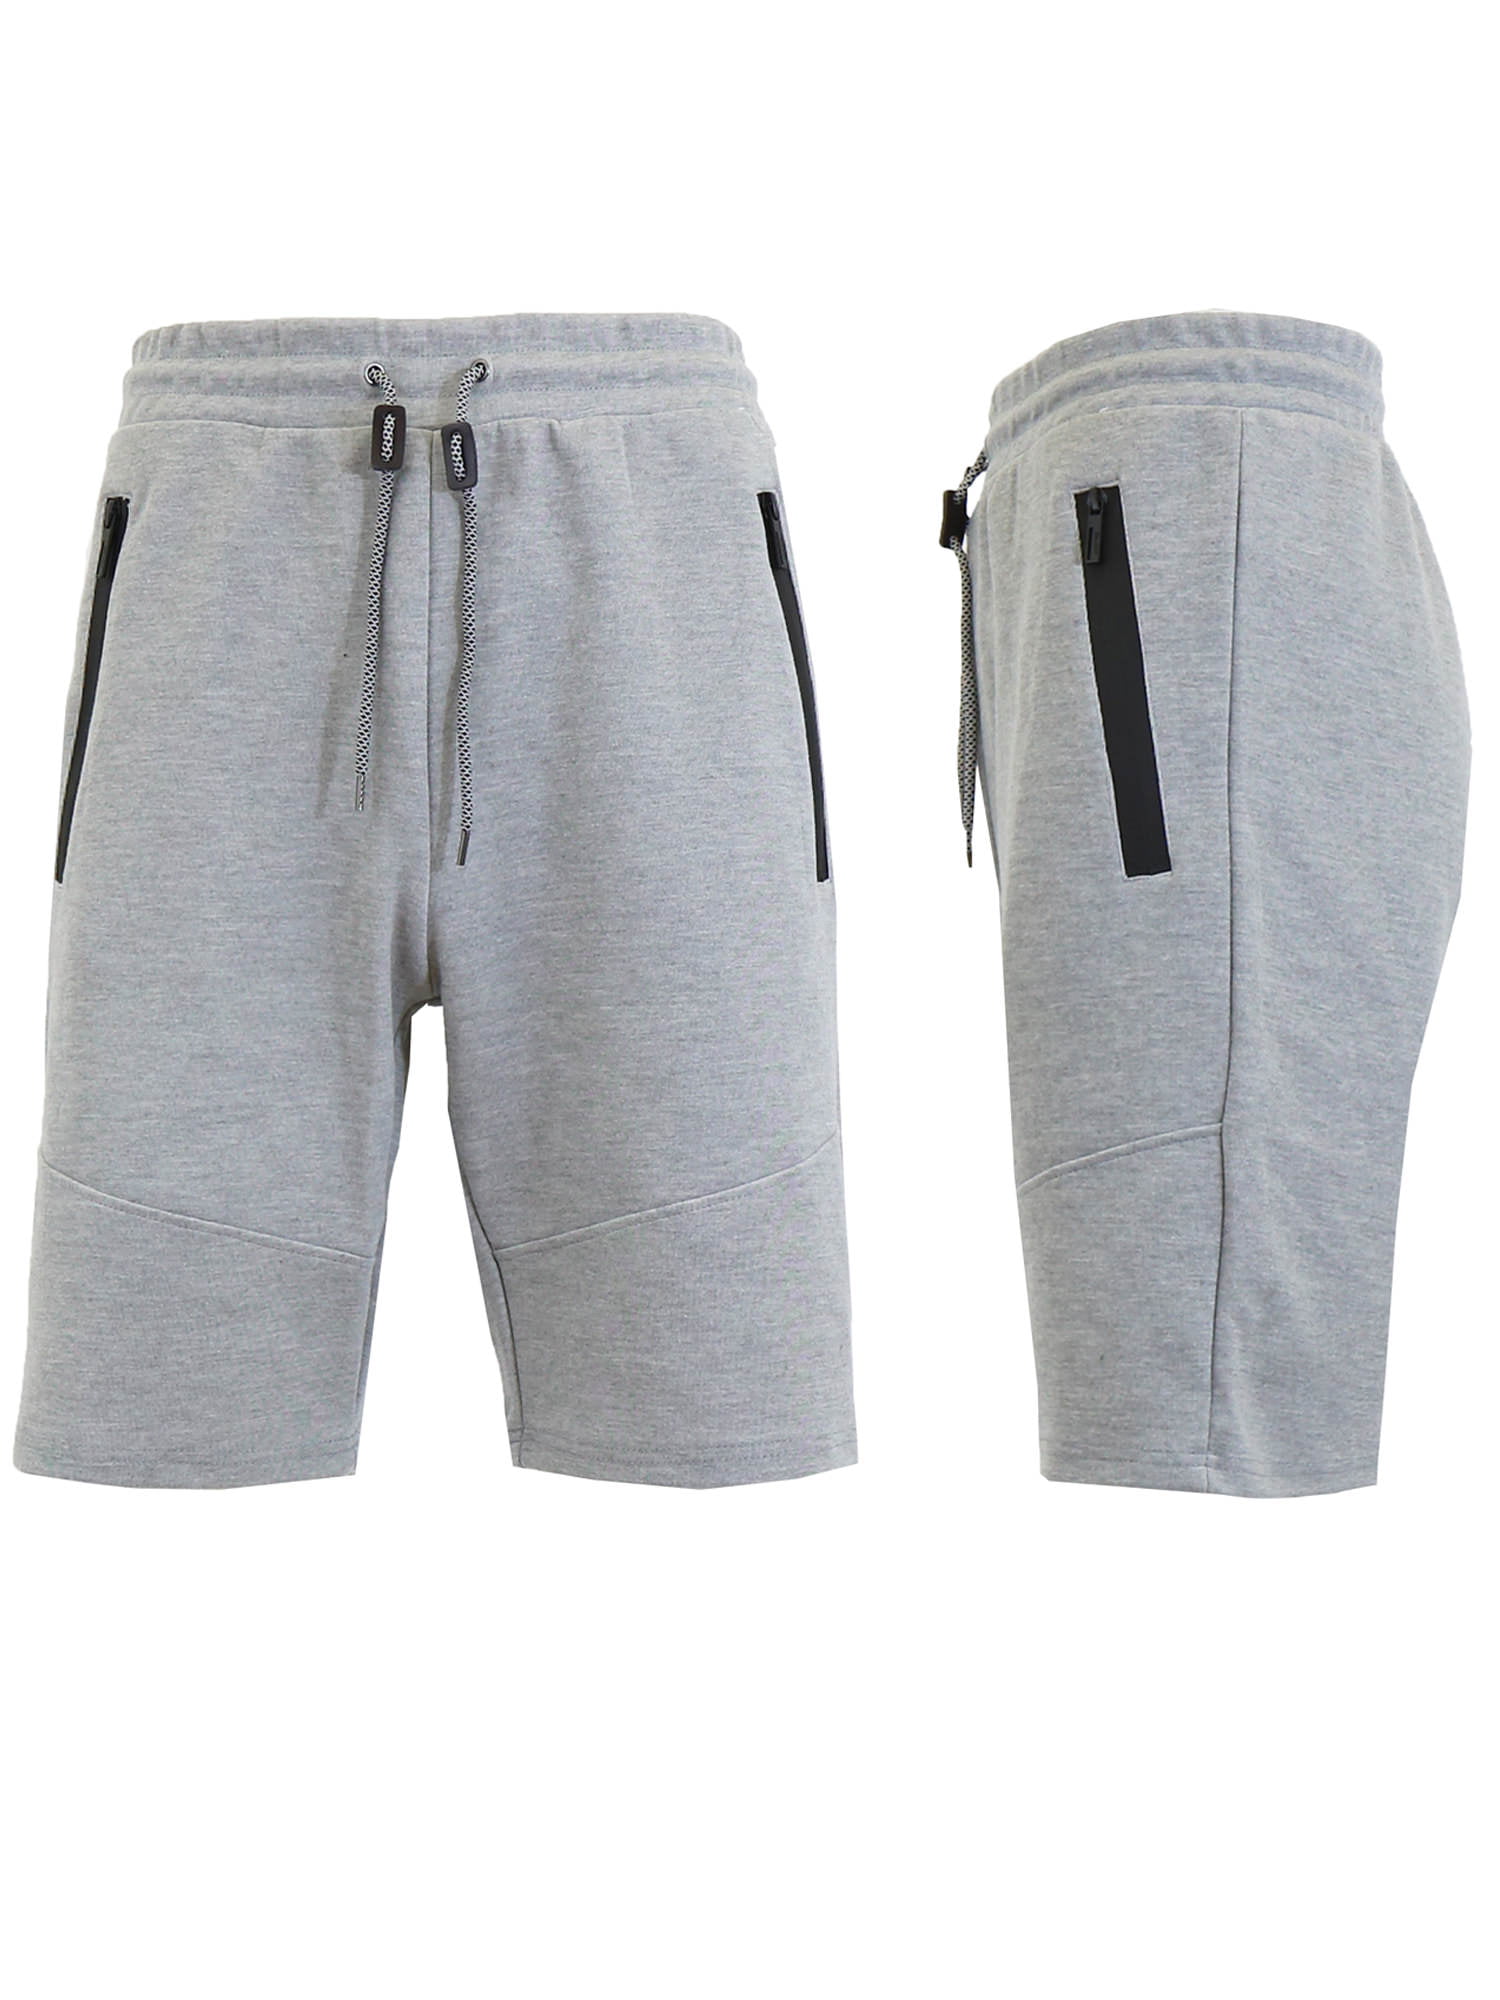 Mens Tech Shorts With Side Zipper Pockets